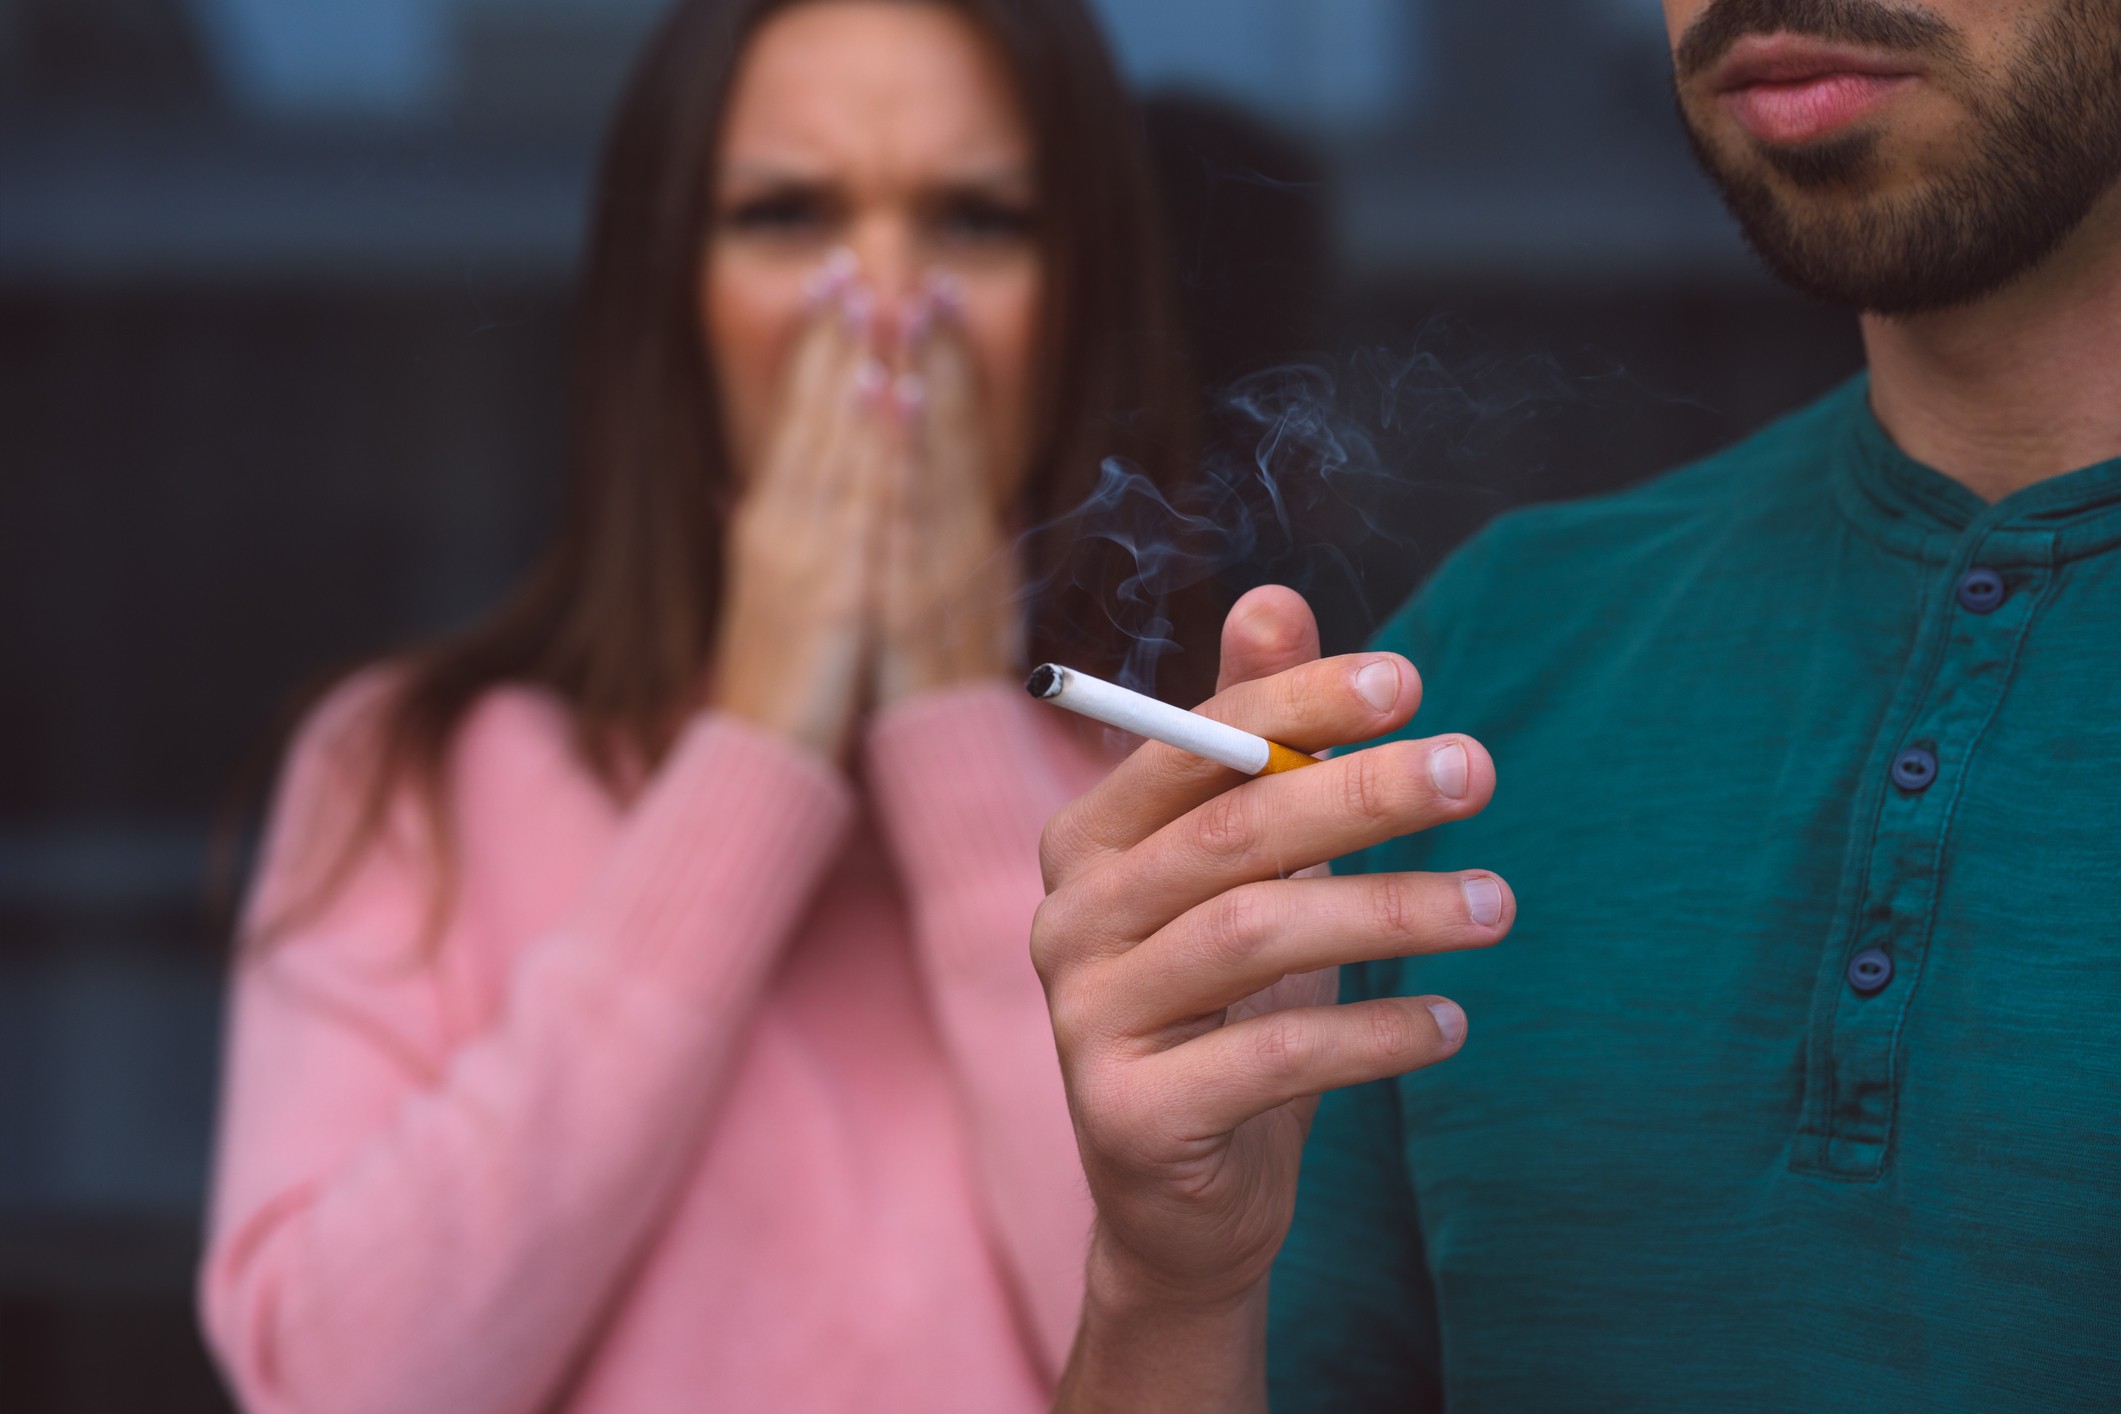 Fumante passivo: entenda o que é e principais riscos